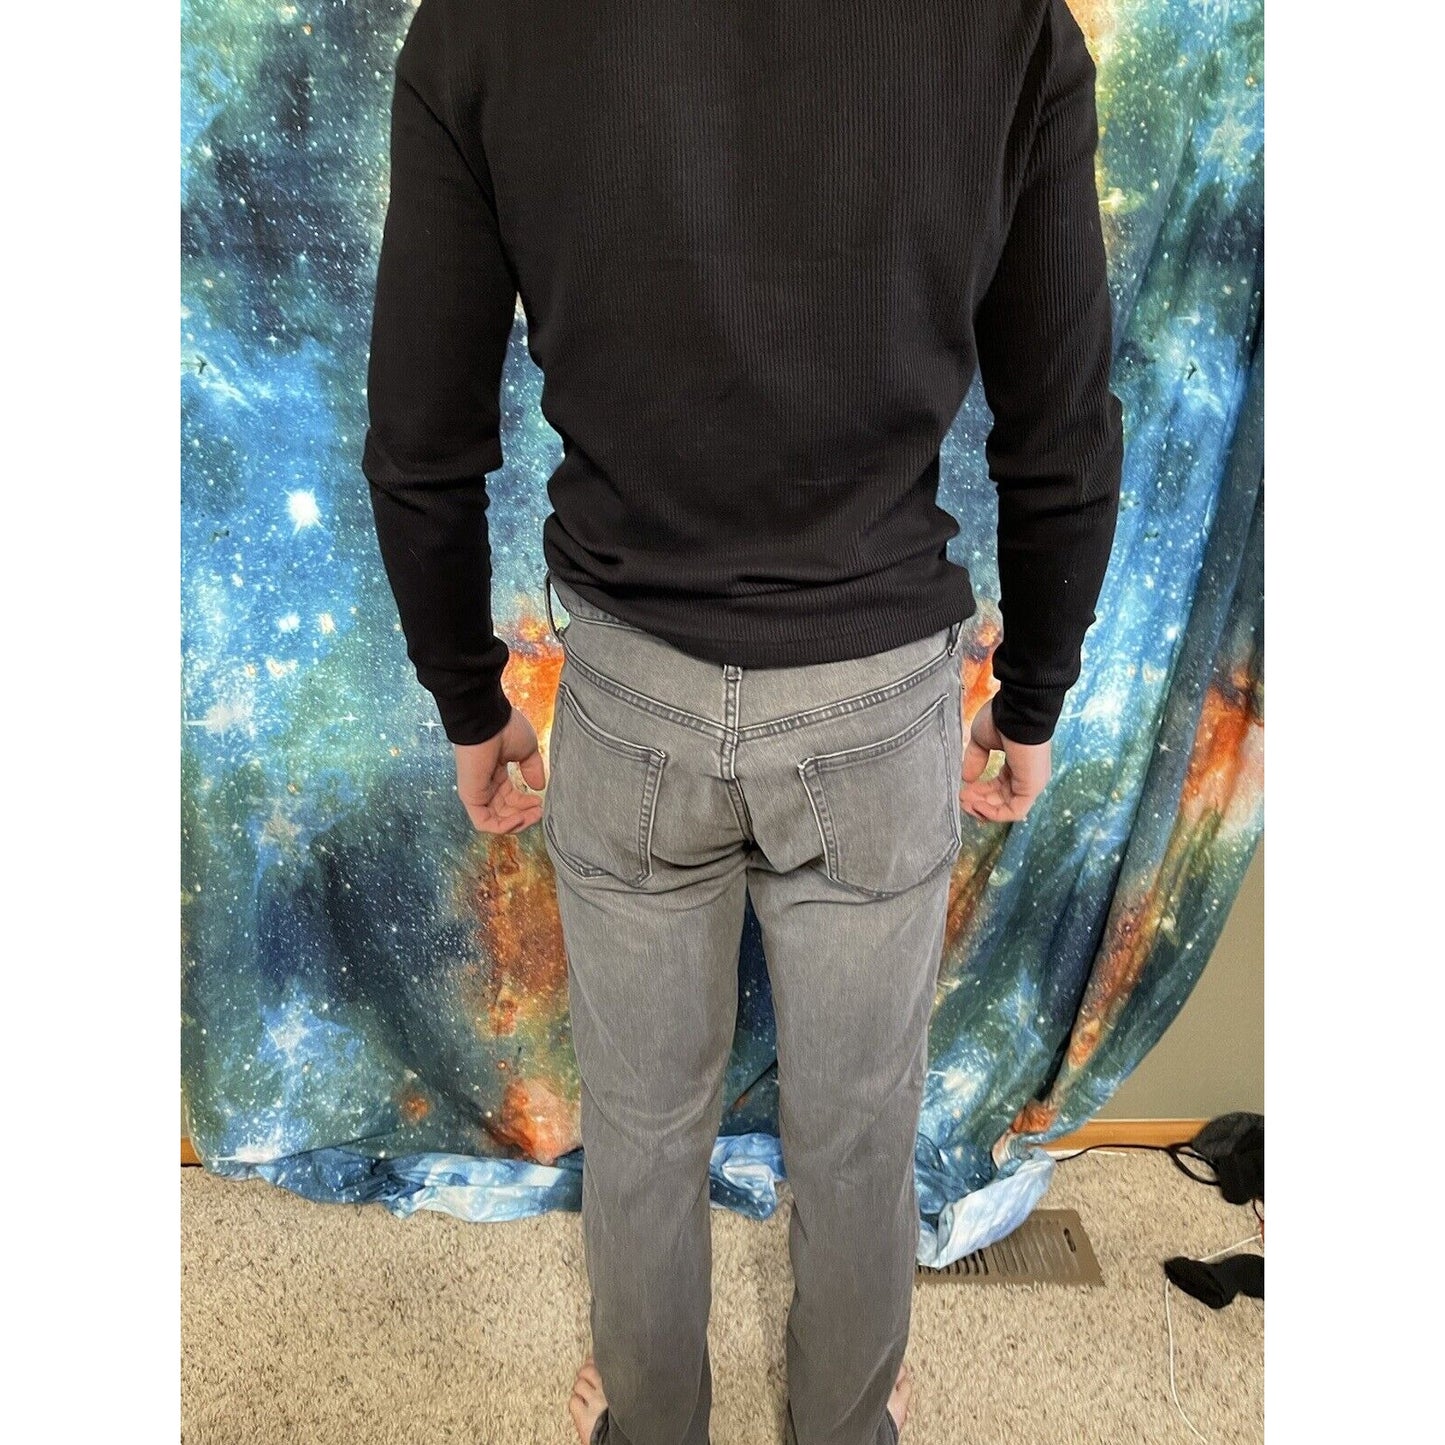 Men’s Gap Denim Jeans skinny 33x34 soft fabric